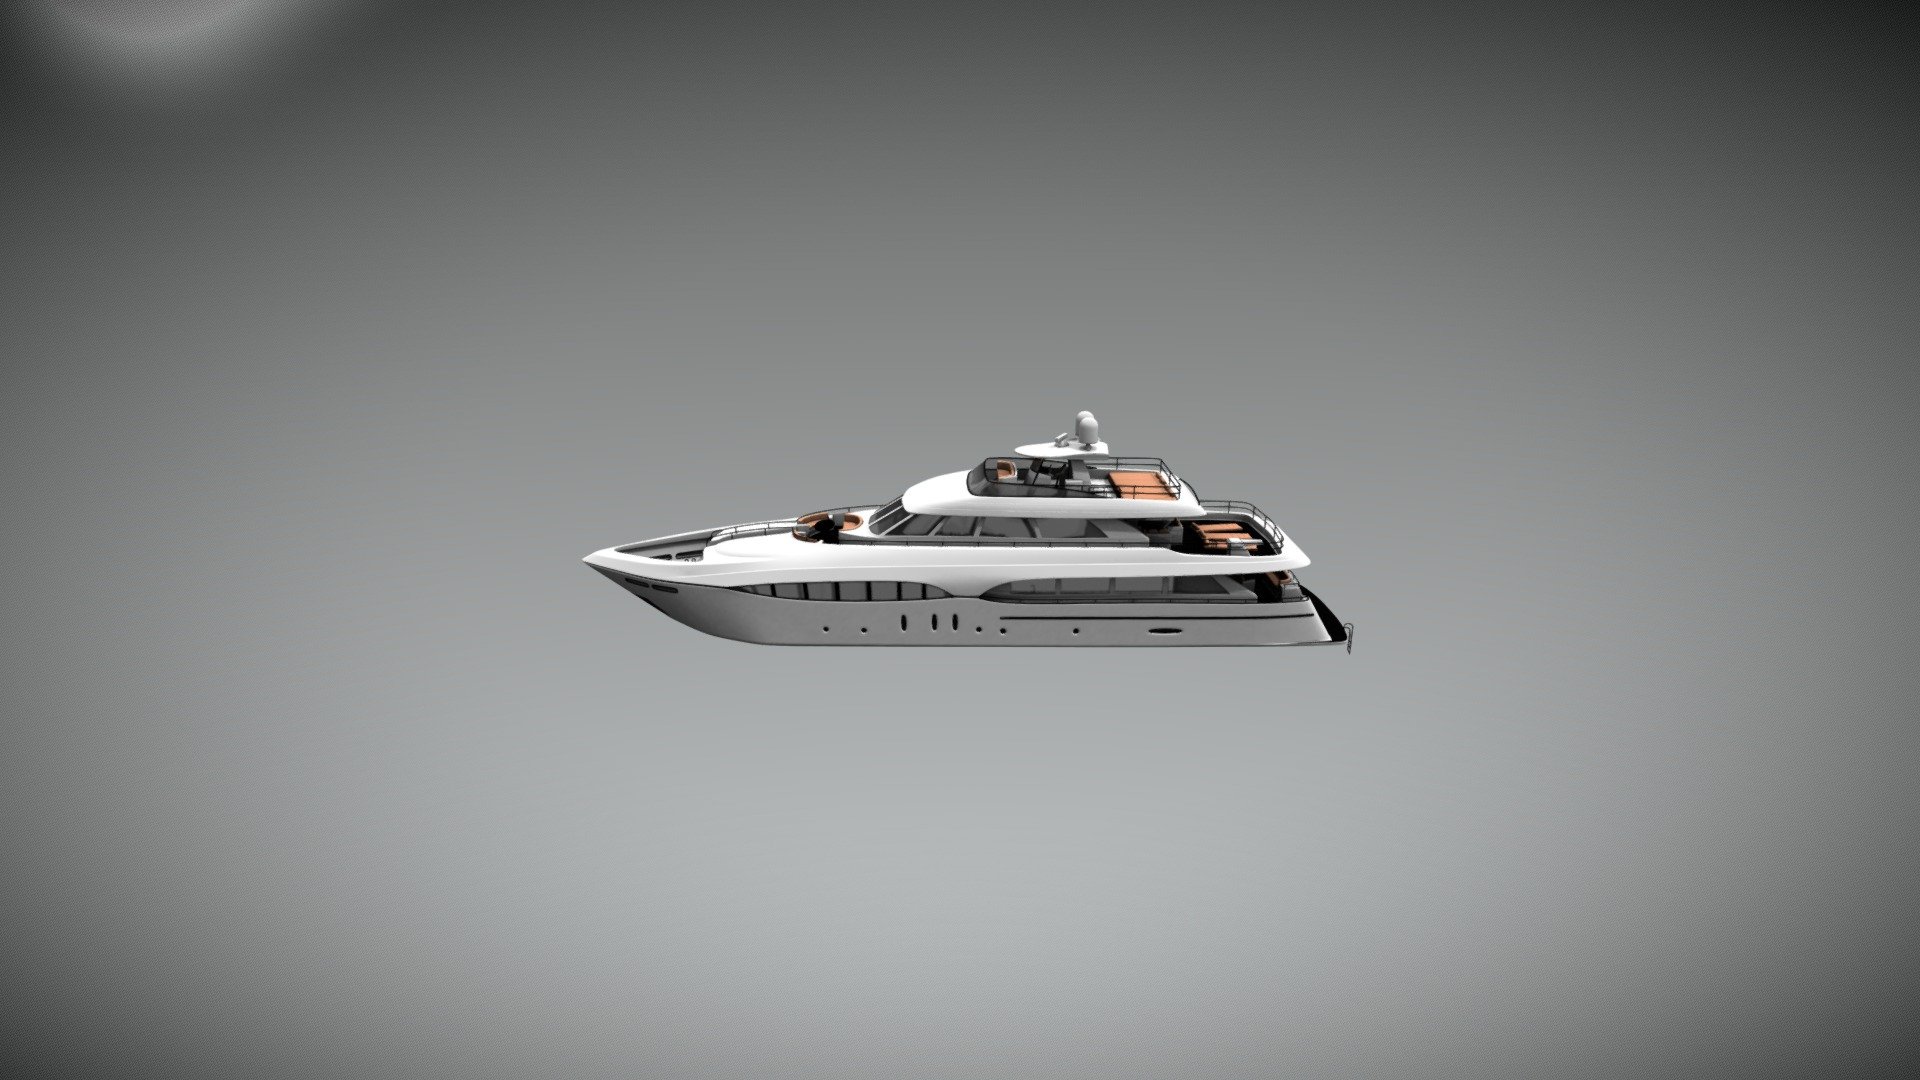 yacht sketch up model